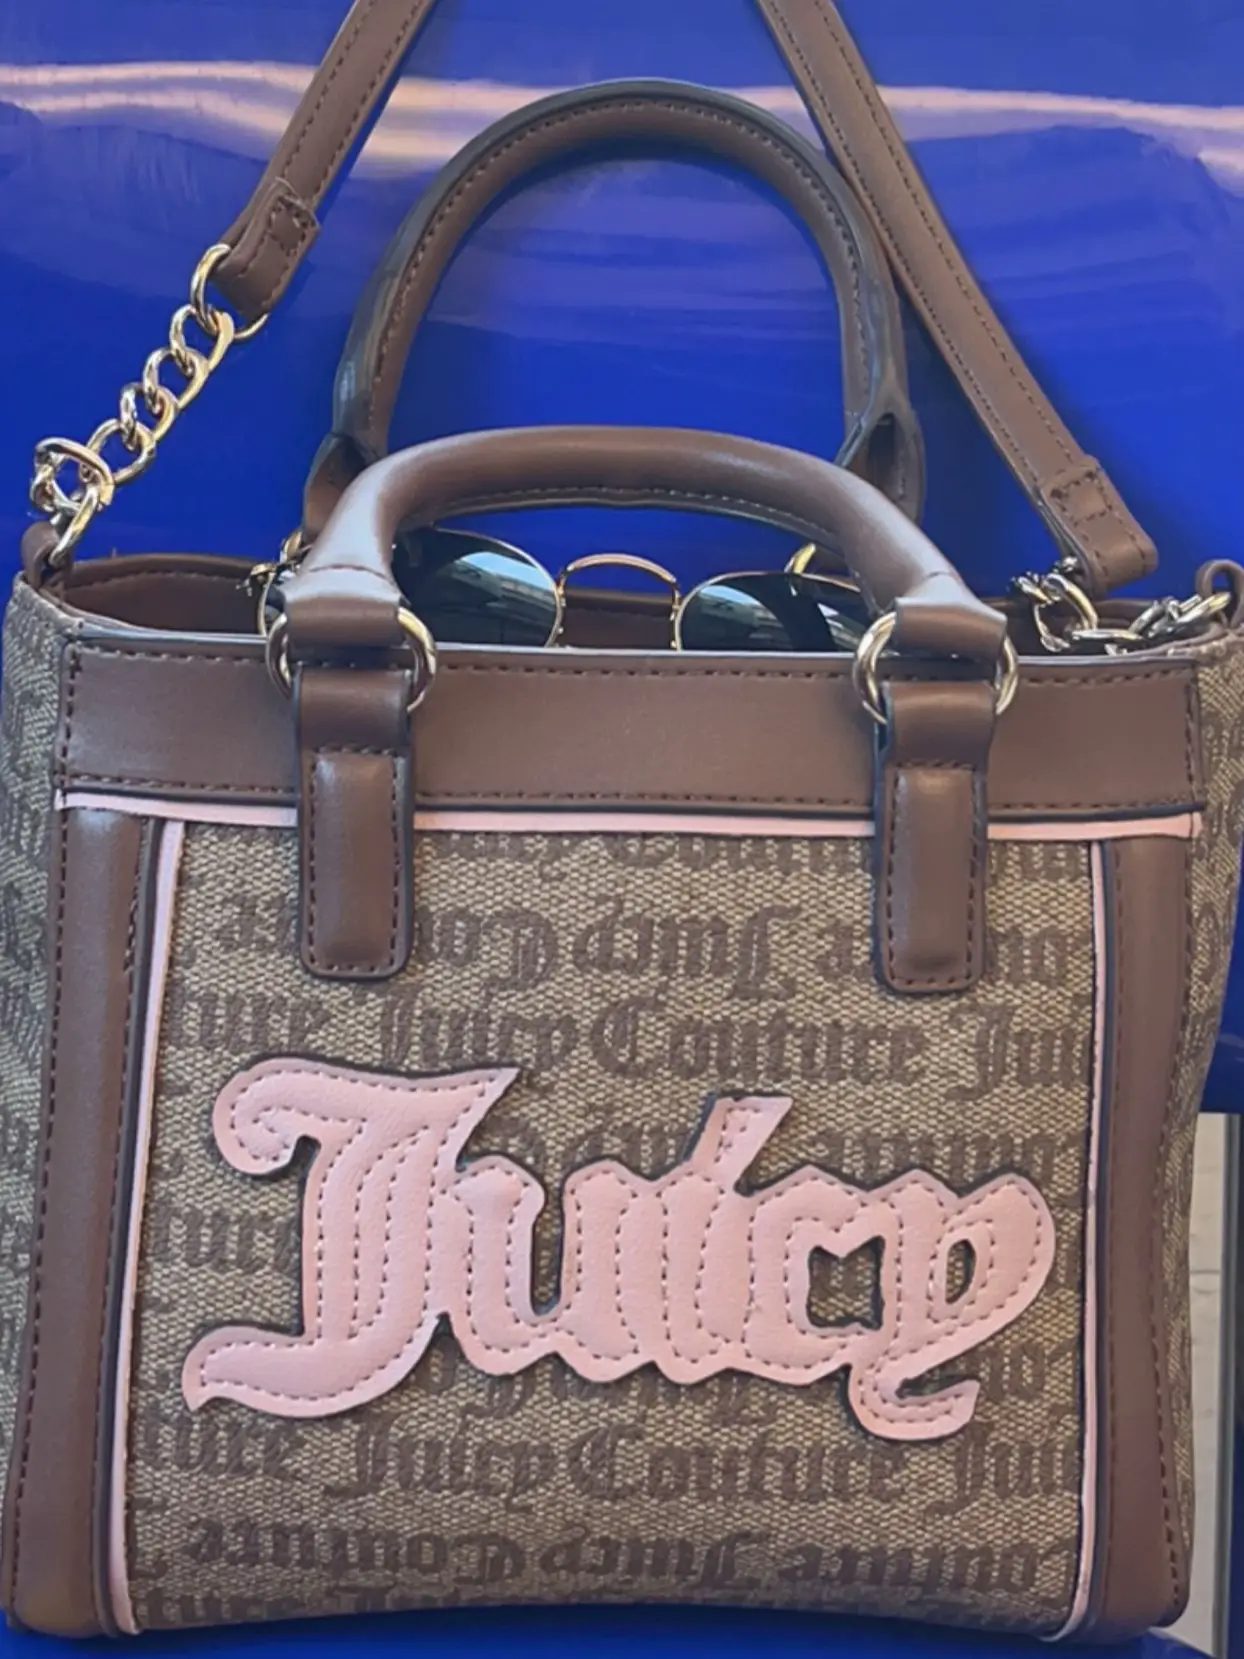 Found this Longchamp at tjmaxx on clearance! : r/handbags